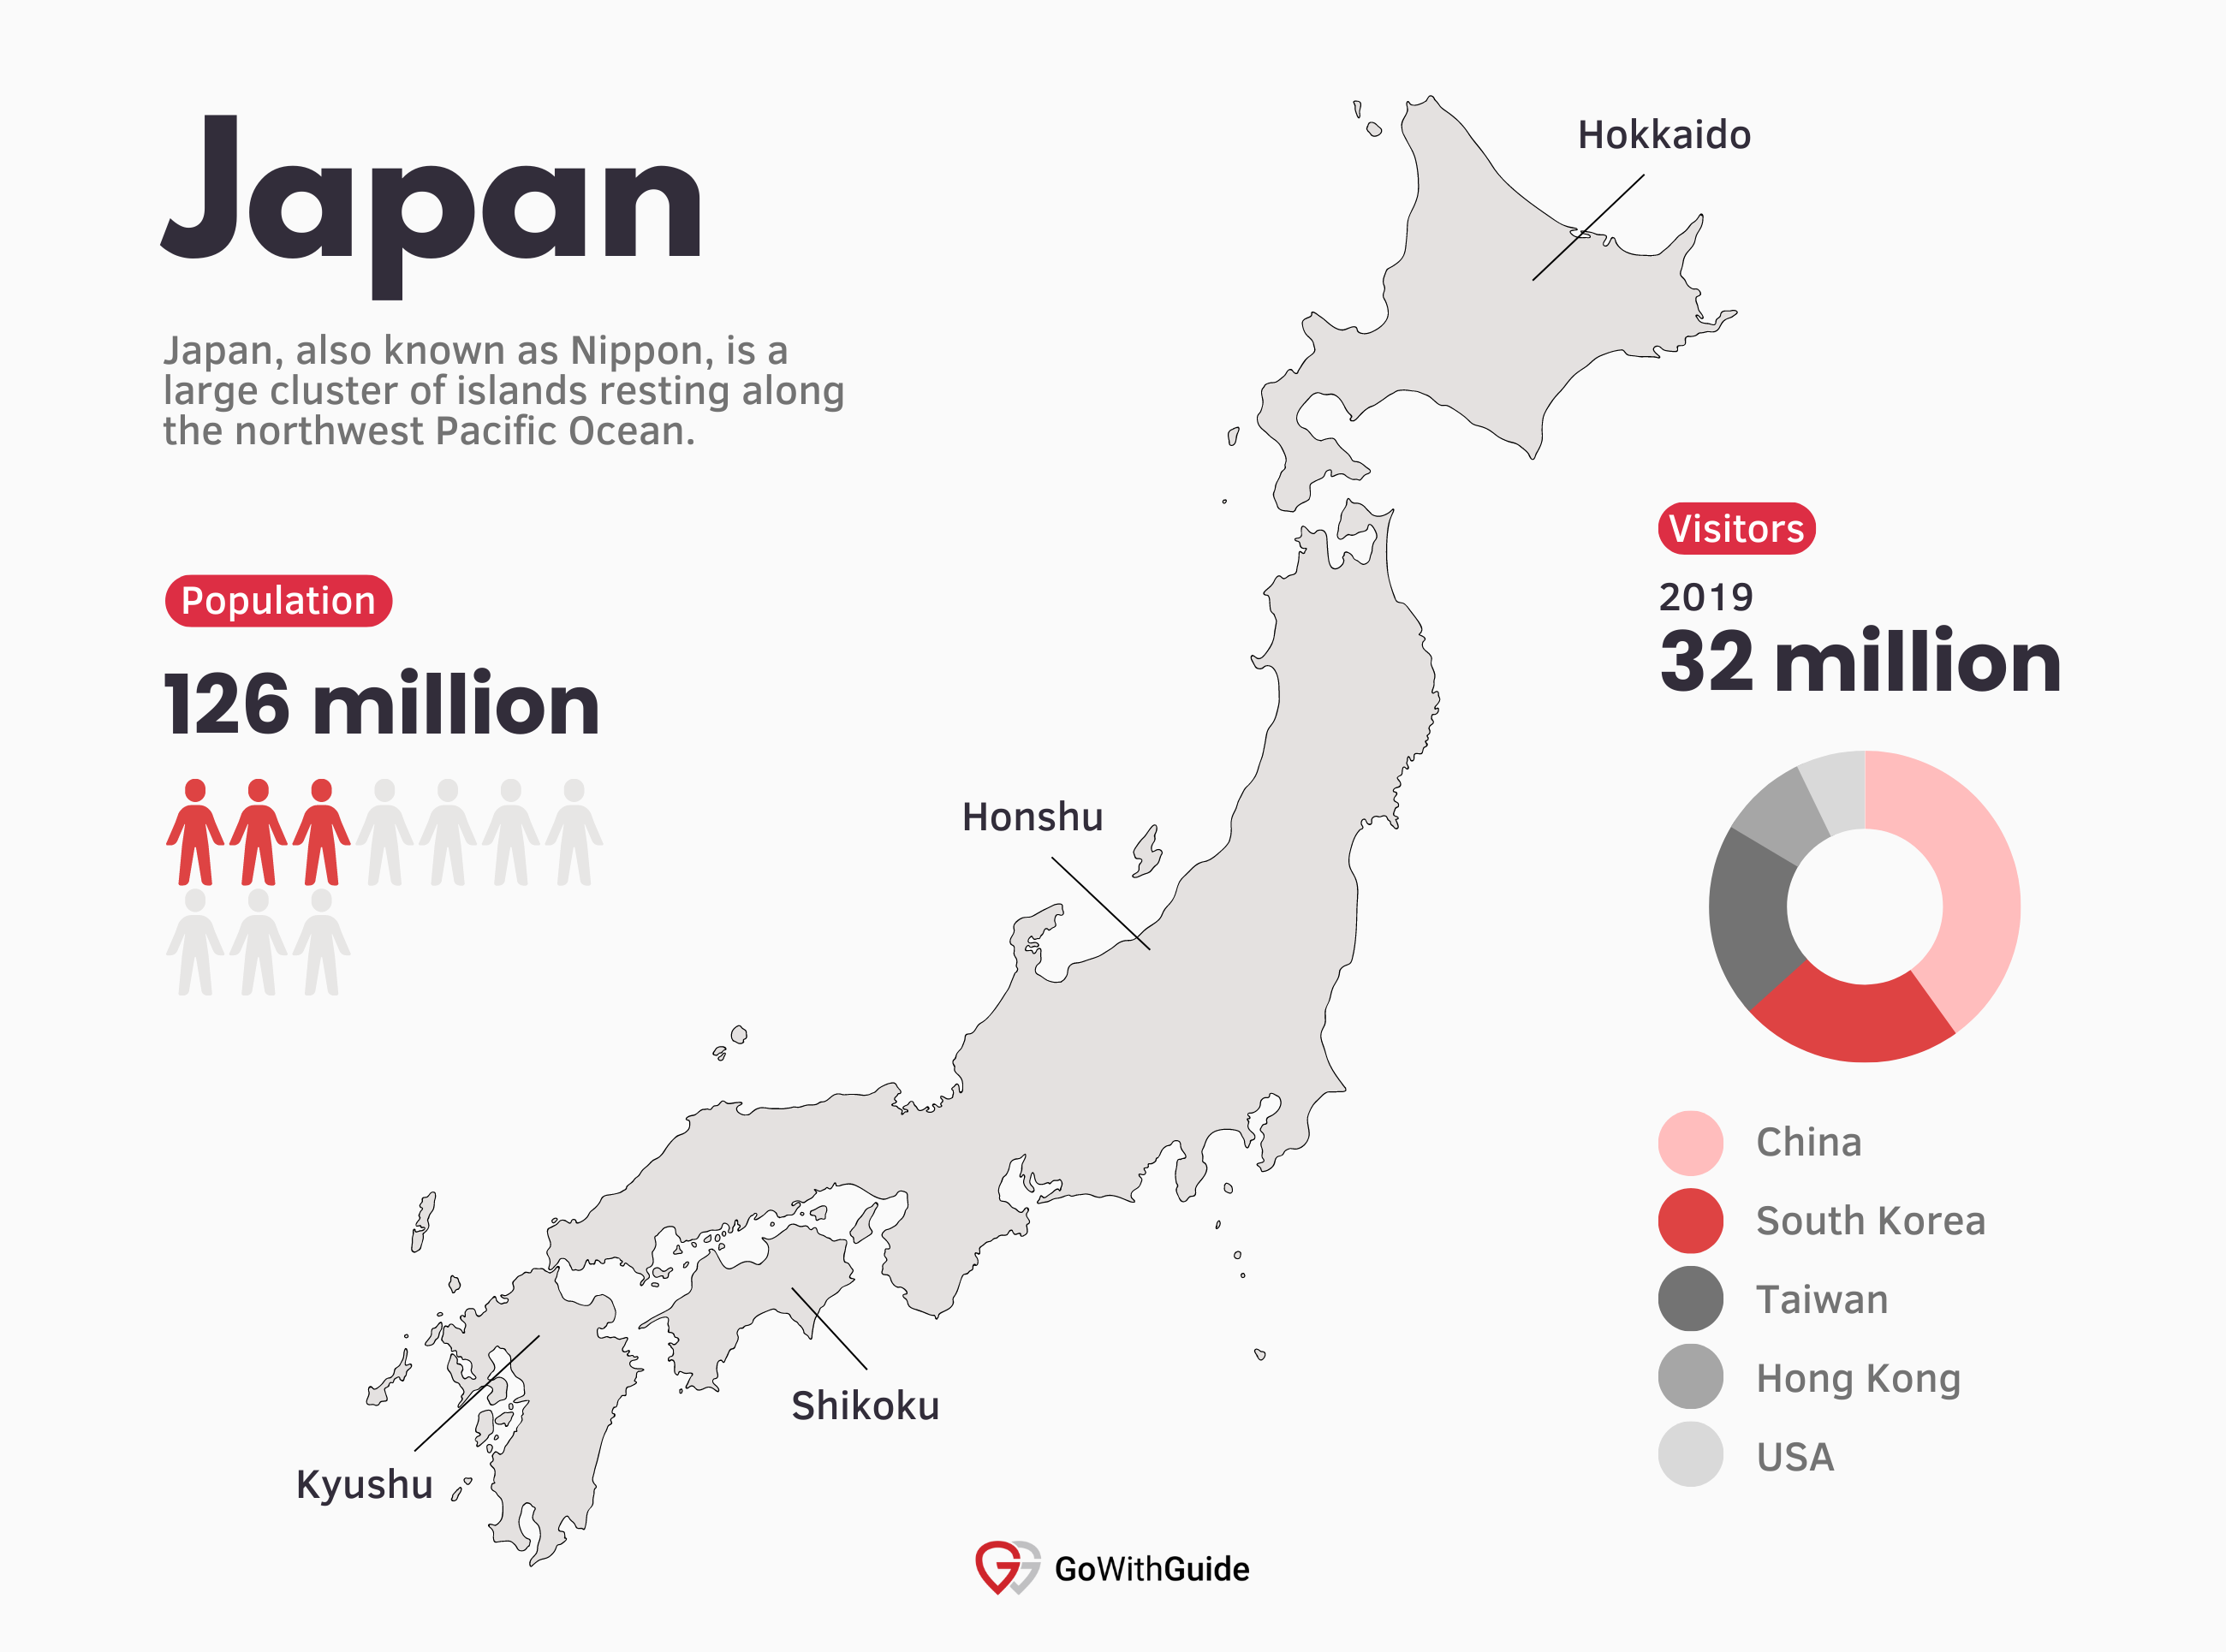 Top countries that visit Japan